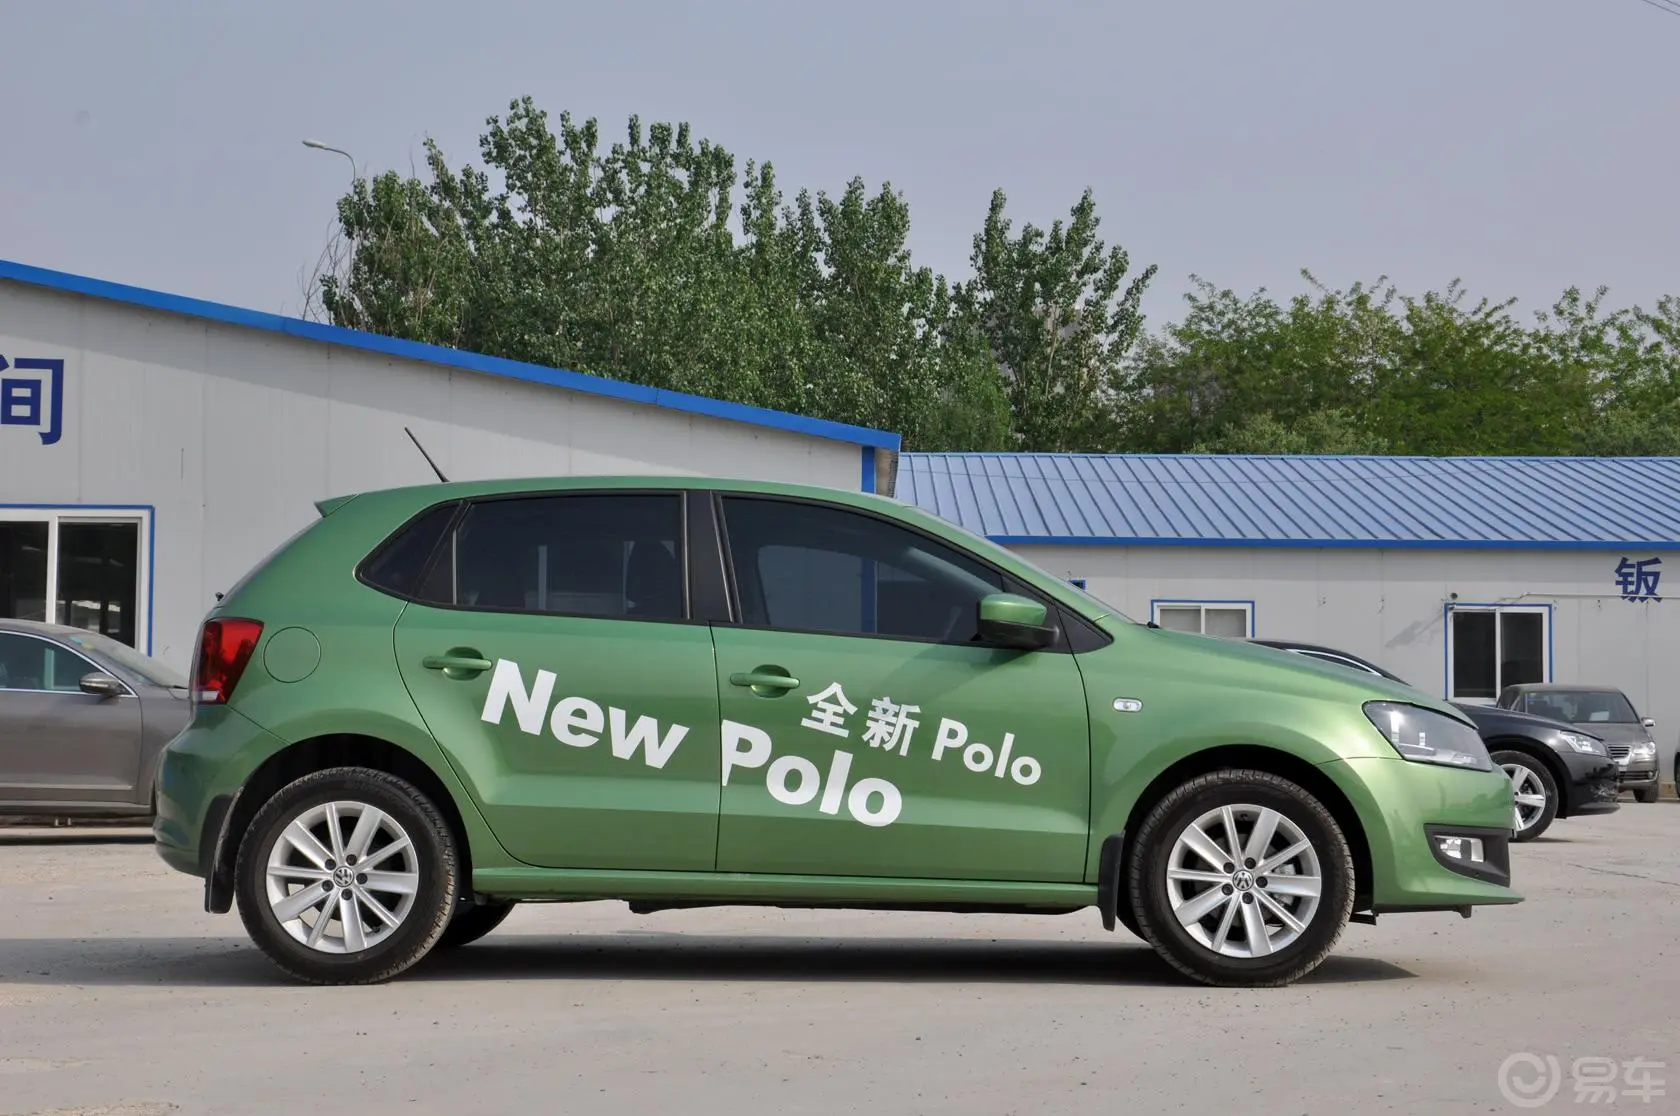 Polo1.4L 自动 豪华版正侧车头向右水平